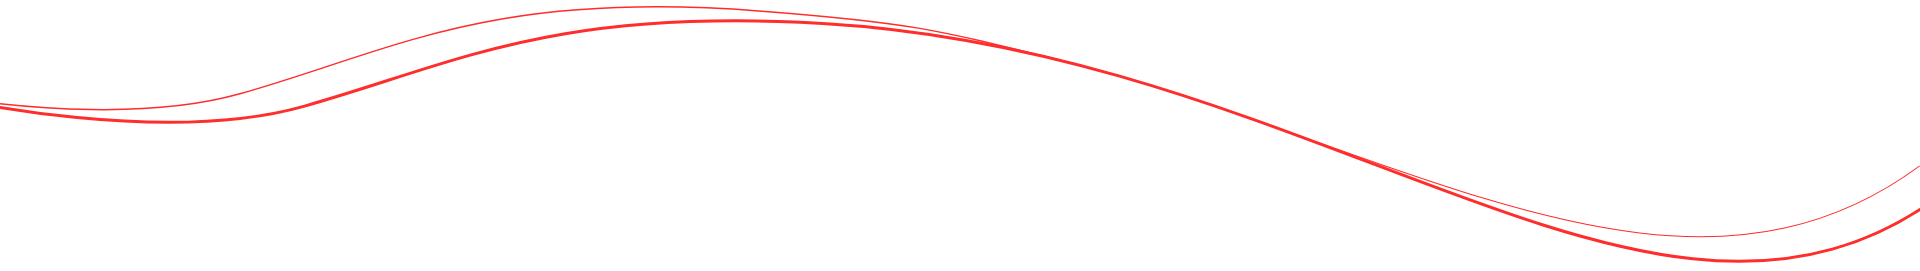 red lines -design element